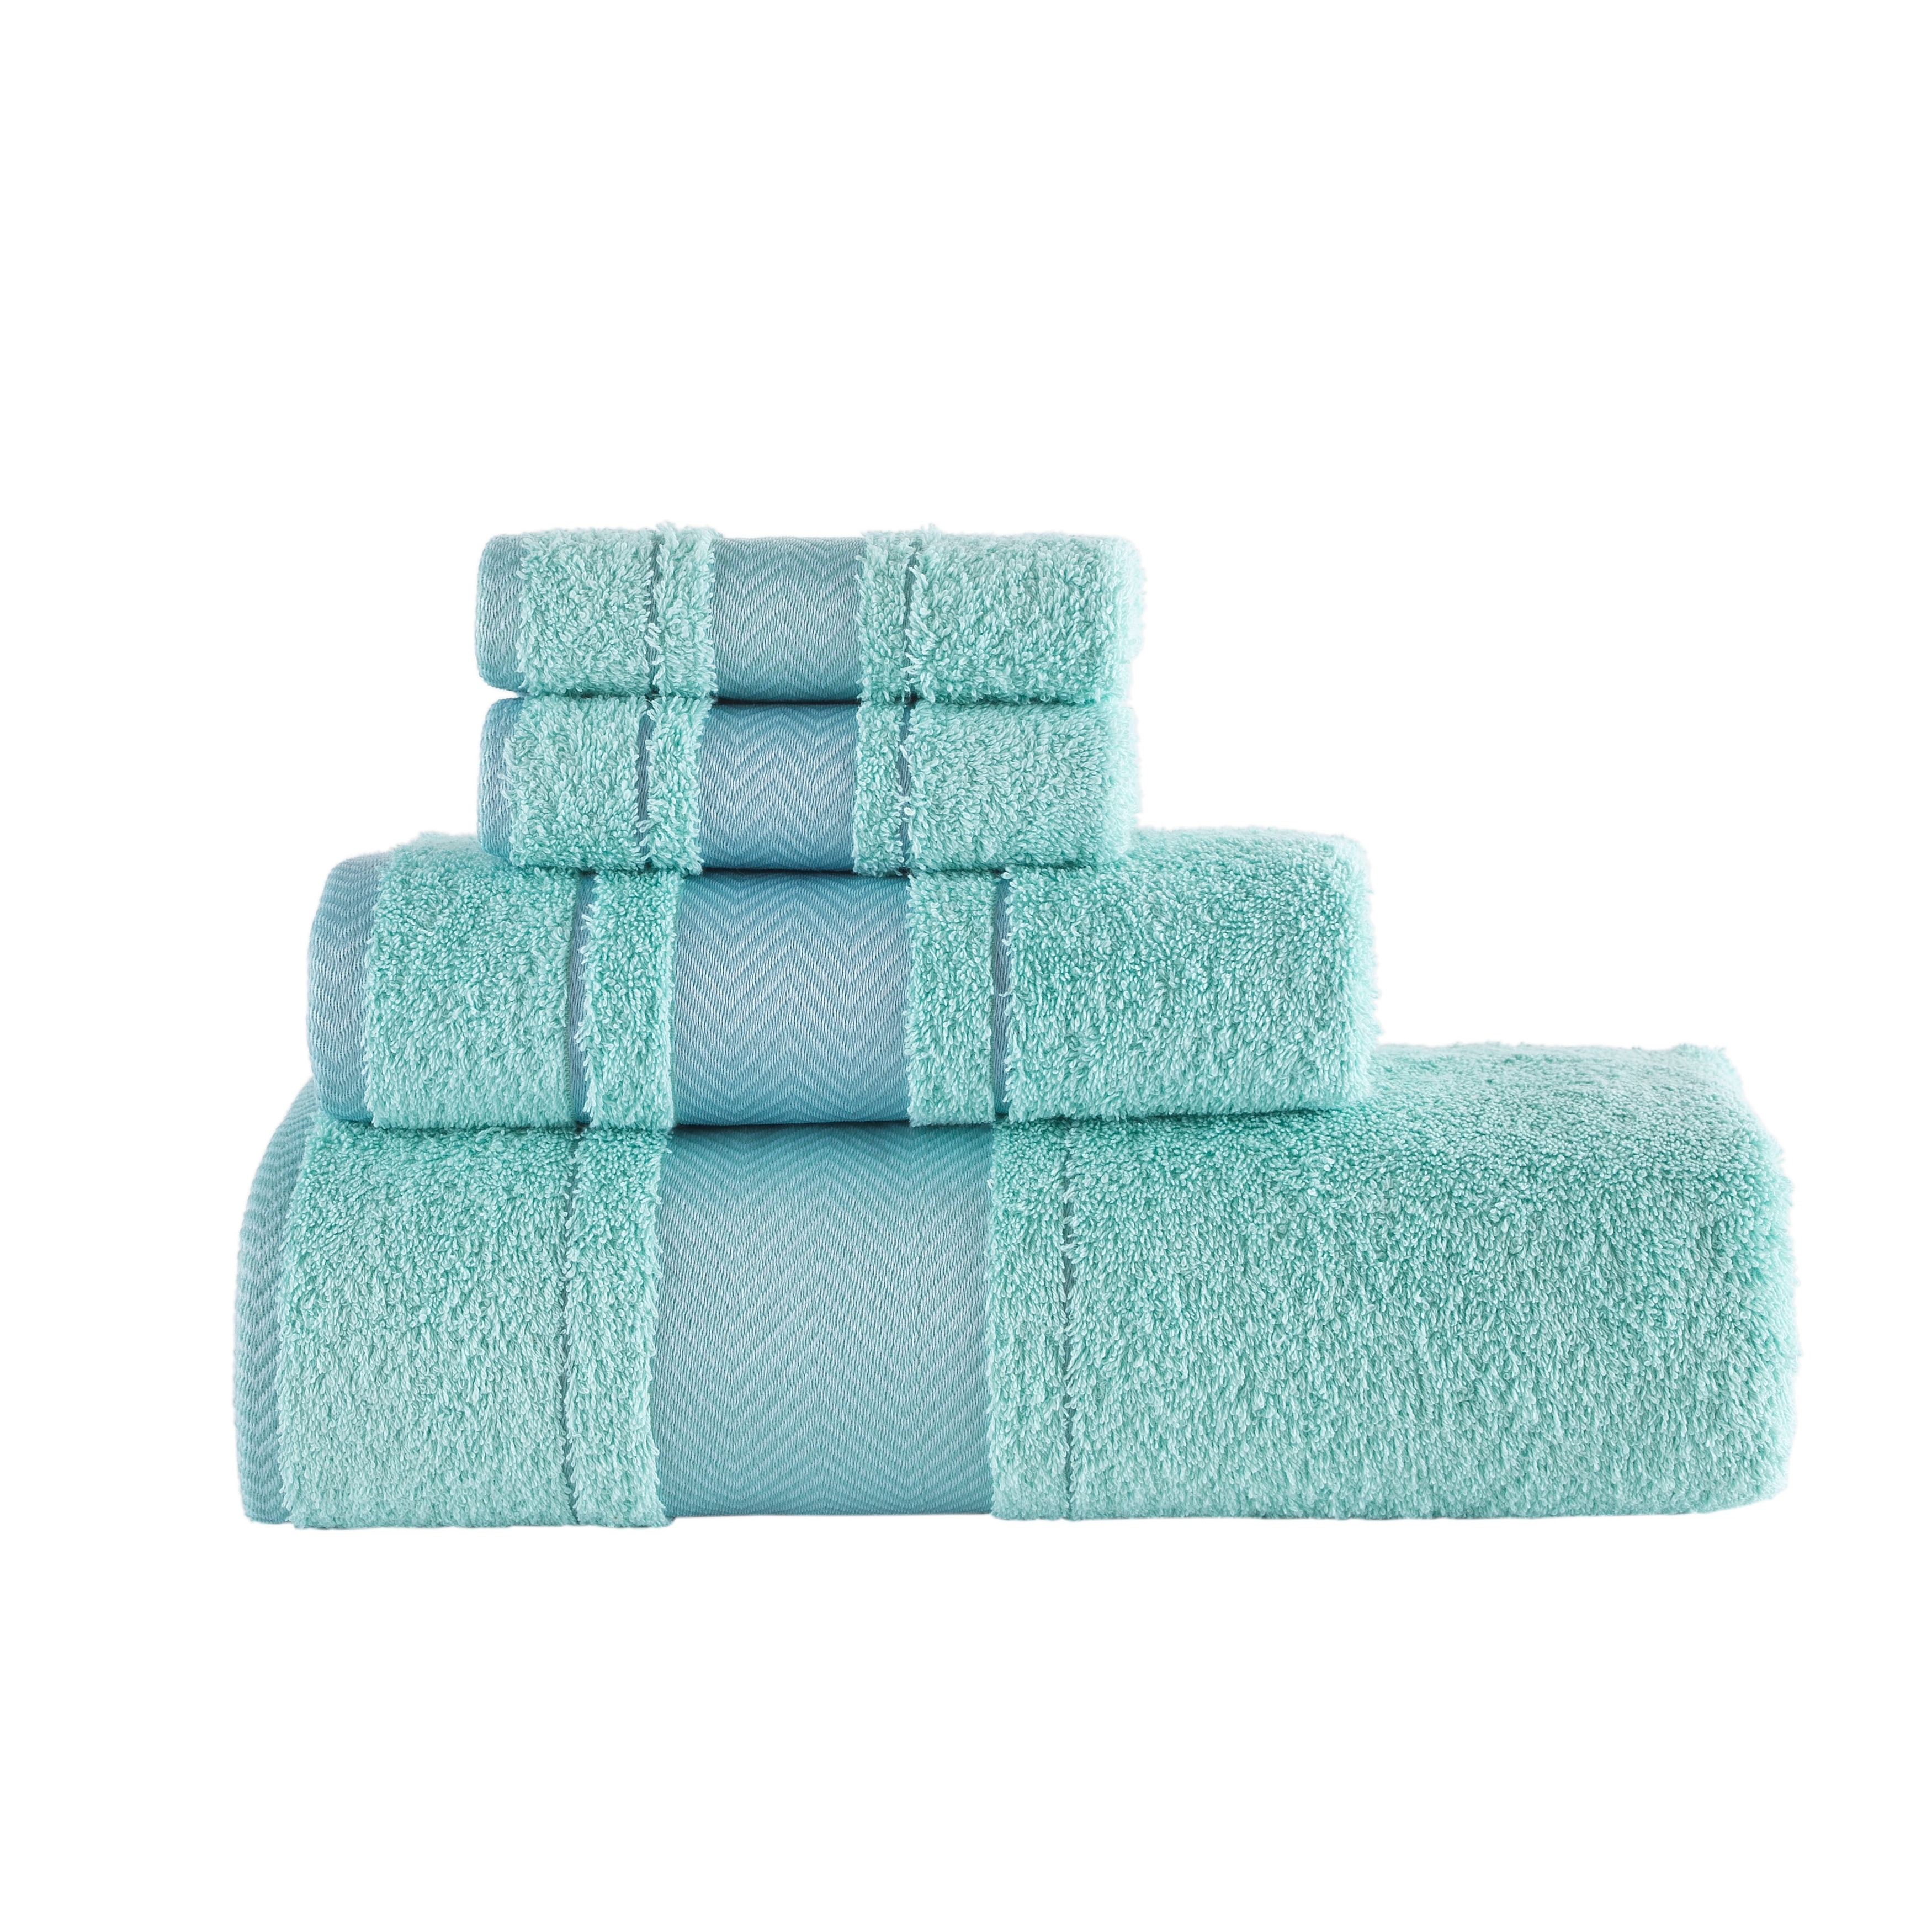 https://ak1.ostkcdn.com/images/products/is/images/direct/46856e8fa7894ac0d95a9eb18e864c6badd66541/KAFTHAN-Textile-Fishbone-Turkish-Cotton-Bath-Towels-%28Set-of-4%29.jpg